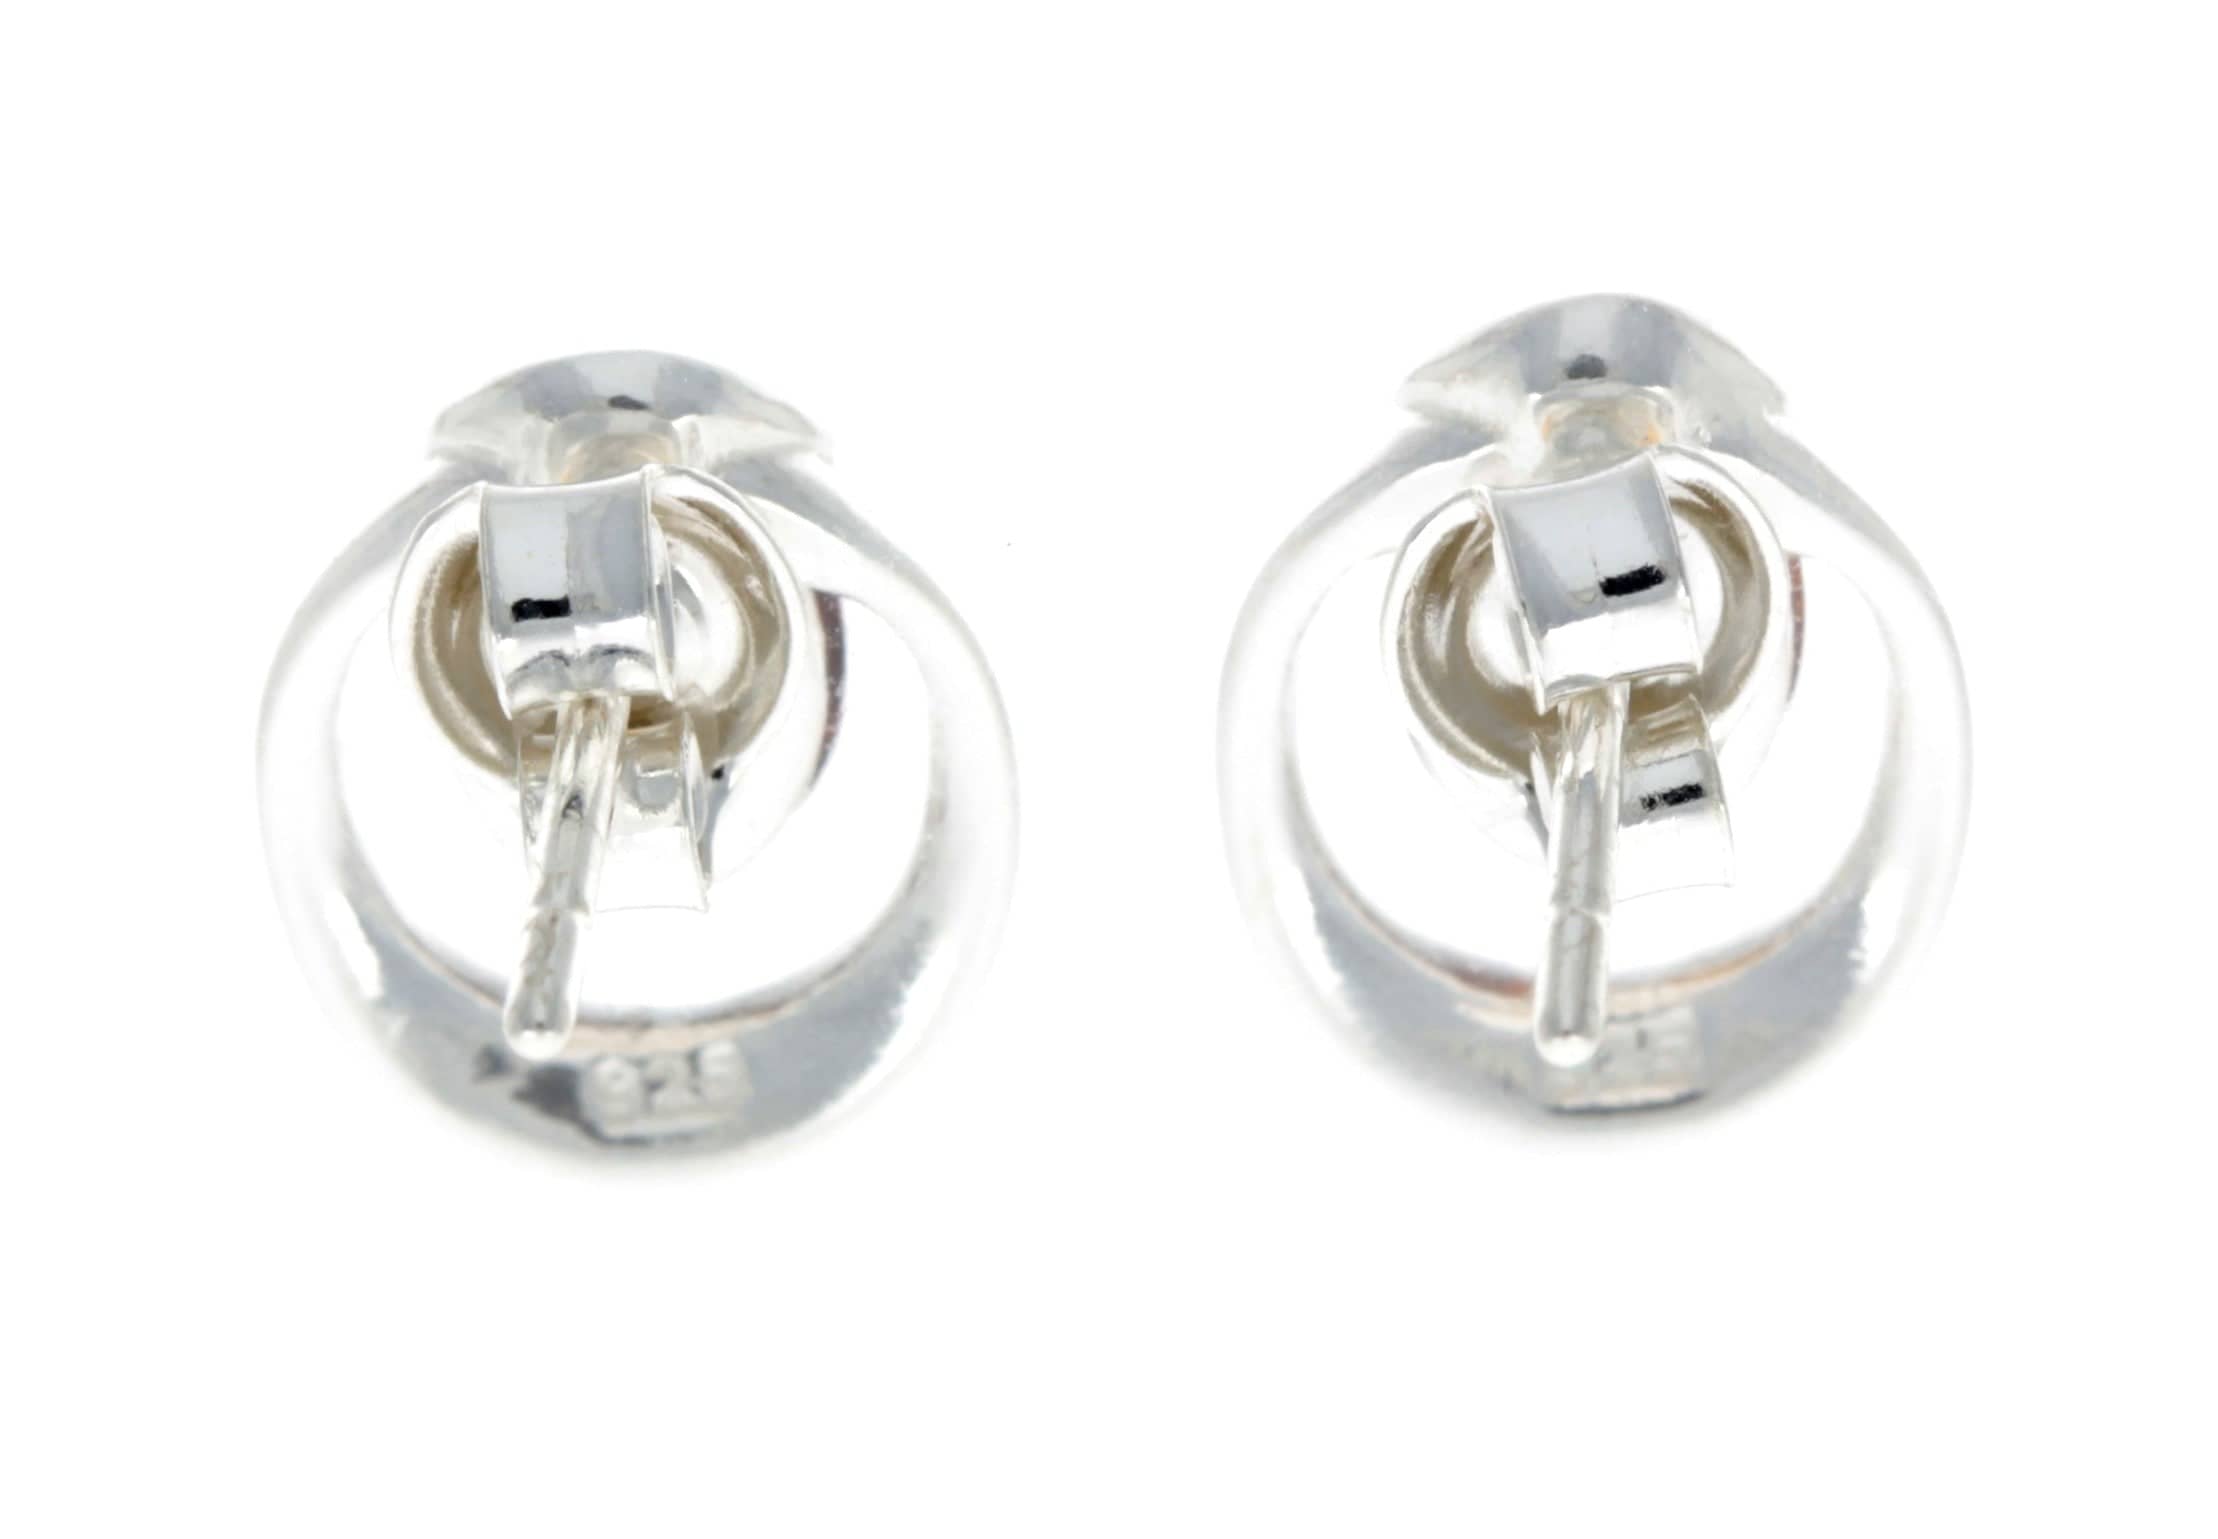 925 Sterling Silver & Genuine Baltic Amber Modern Studs Earrings - GL155